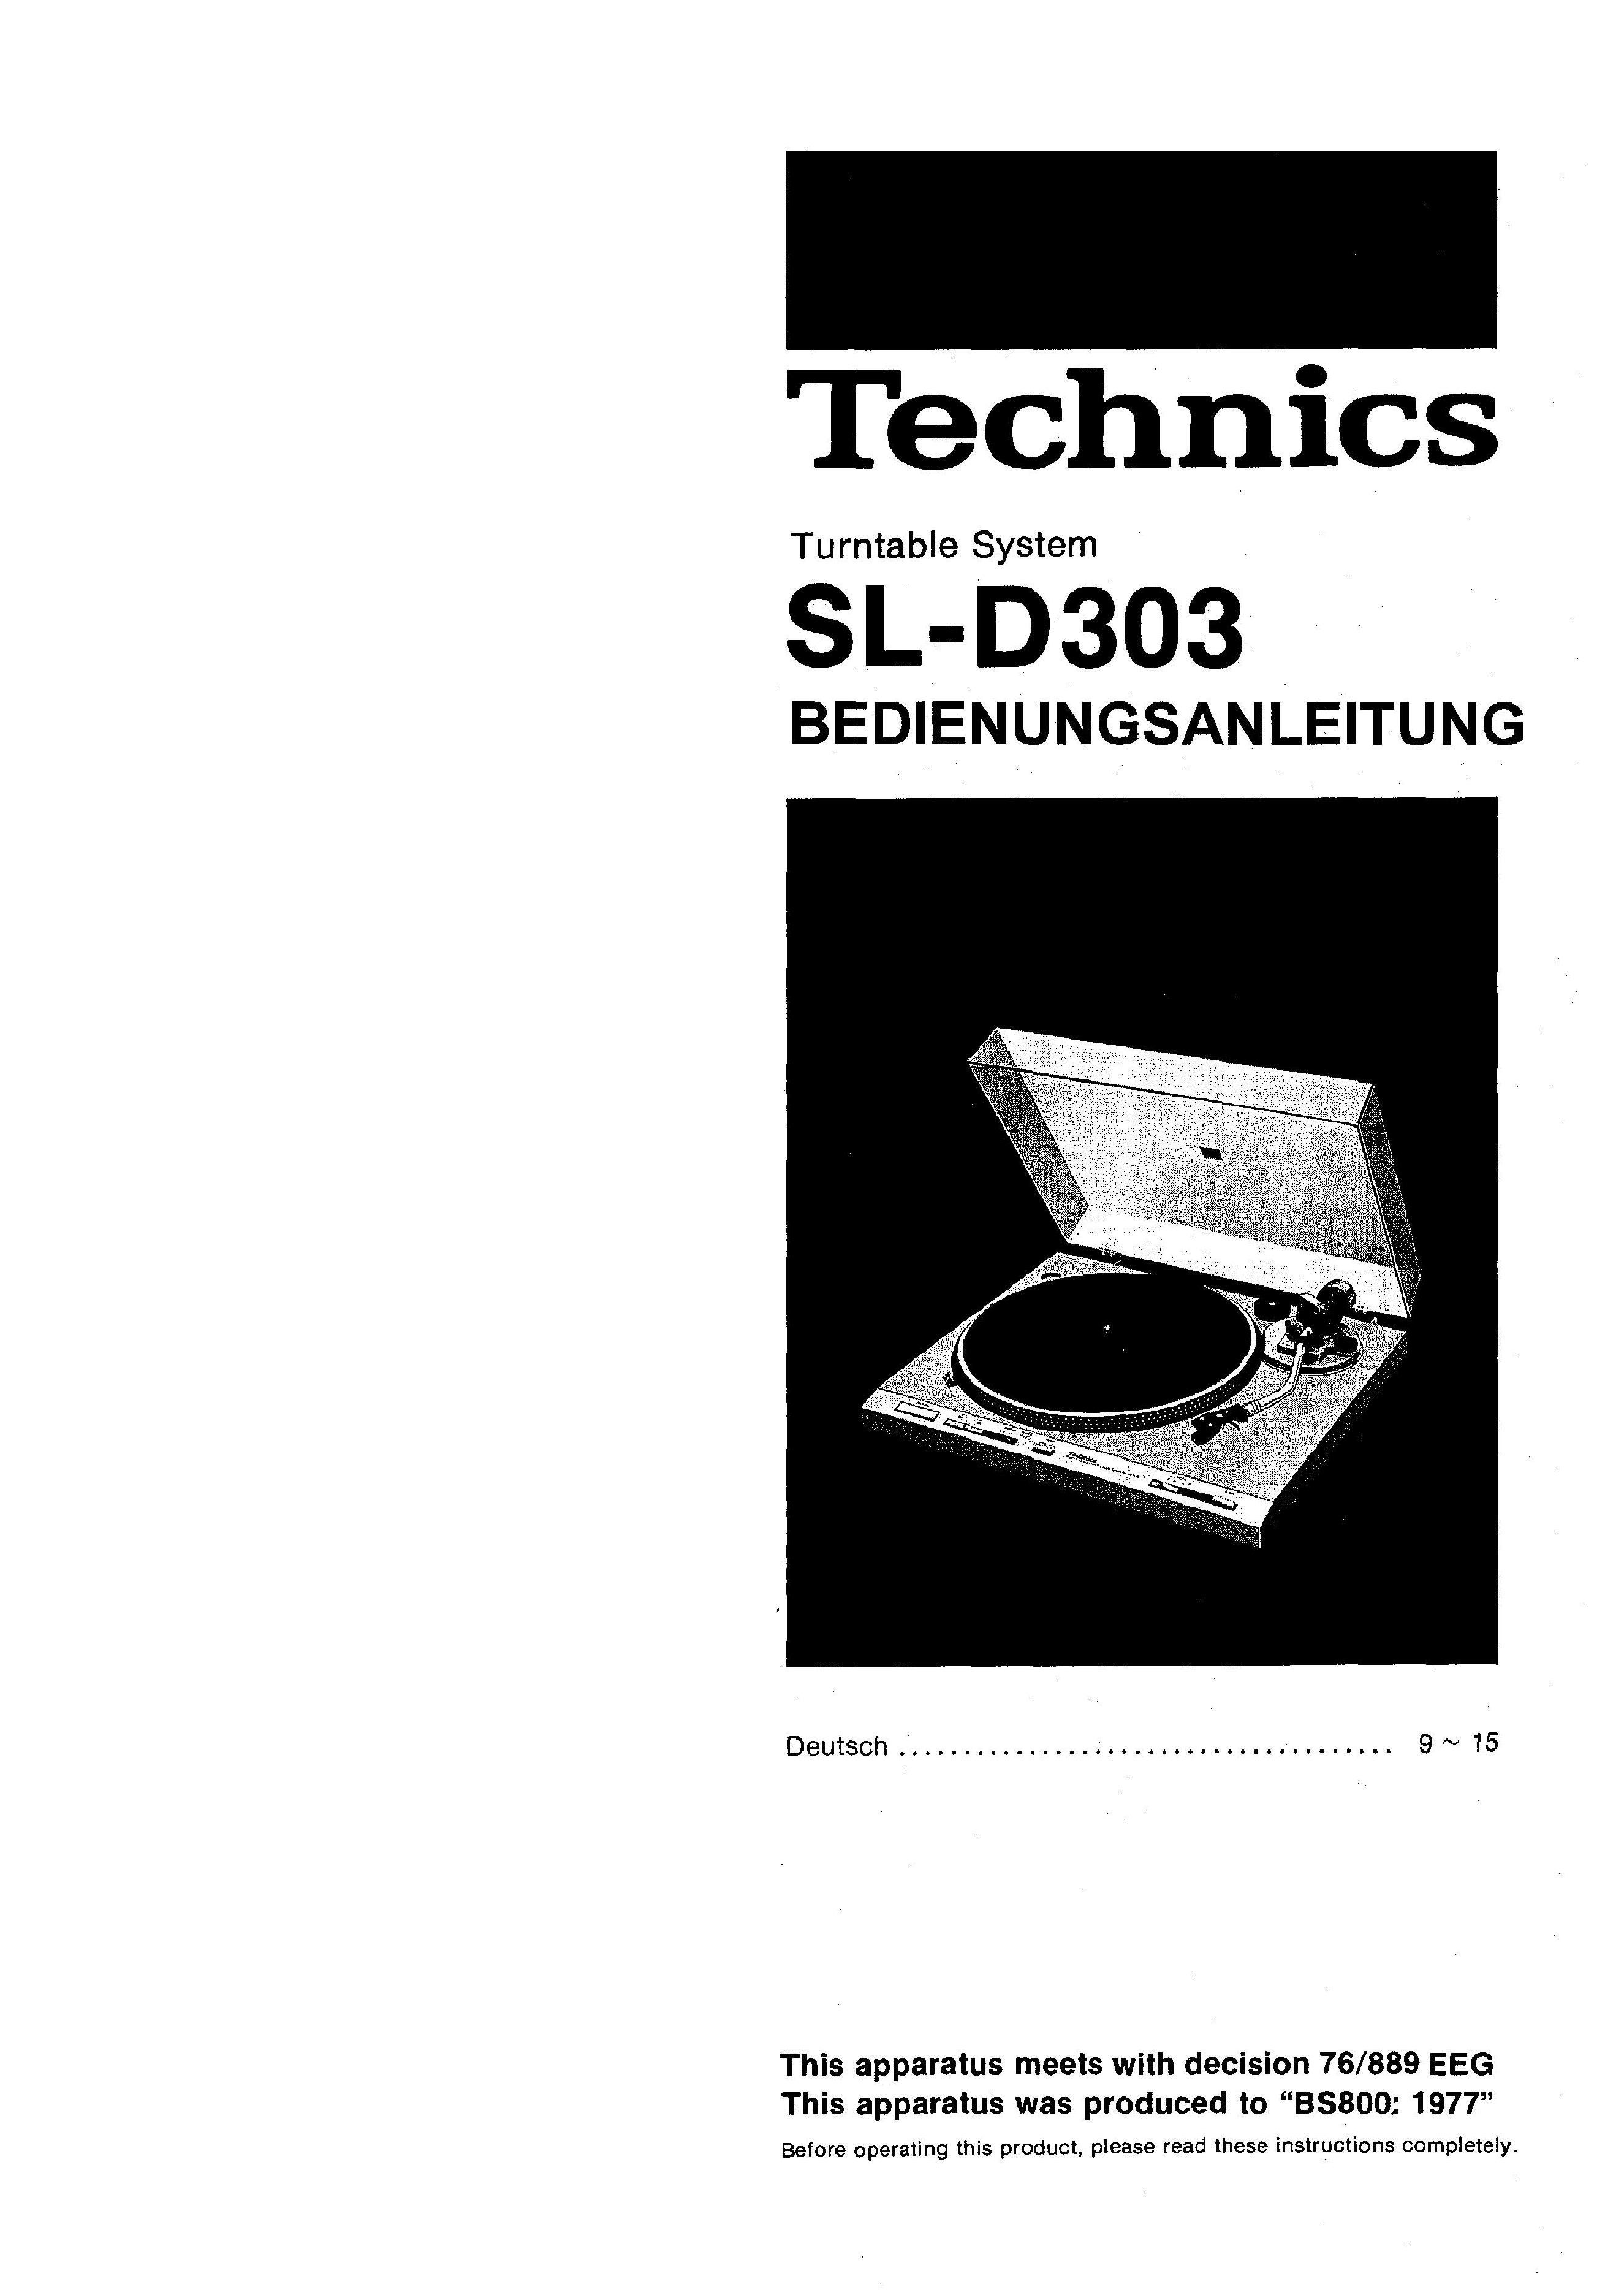 TECHNICS SL-D303 - Owner's Manual Immediate Download